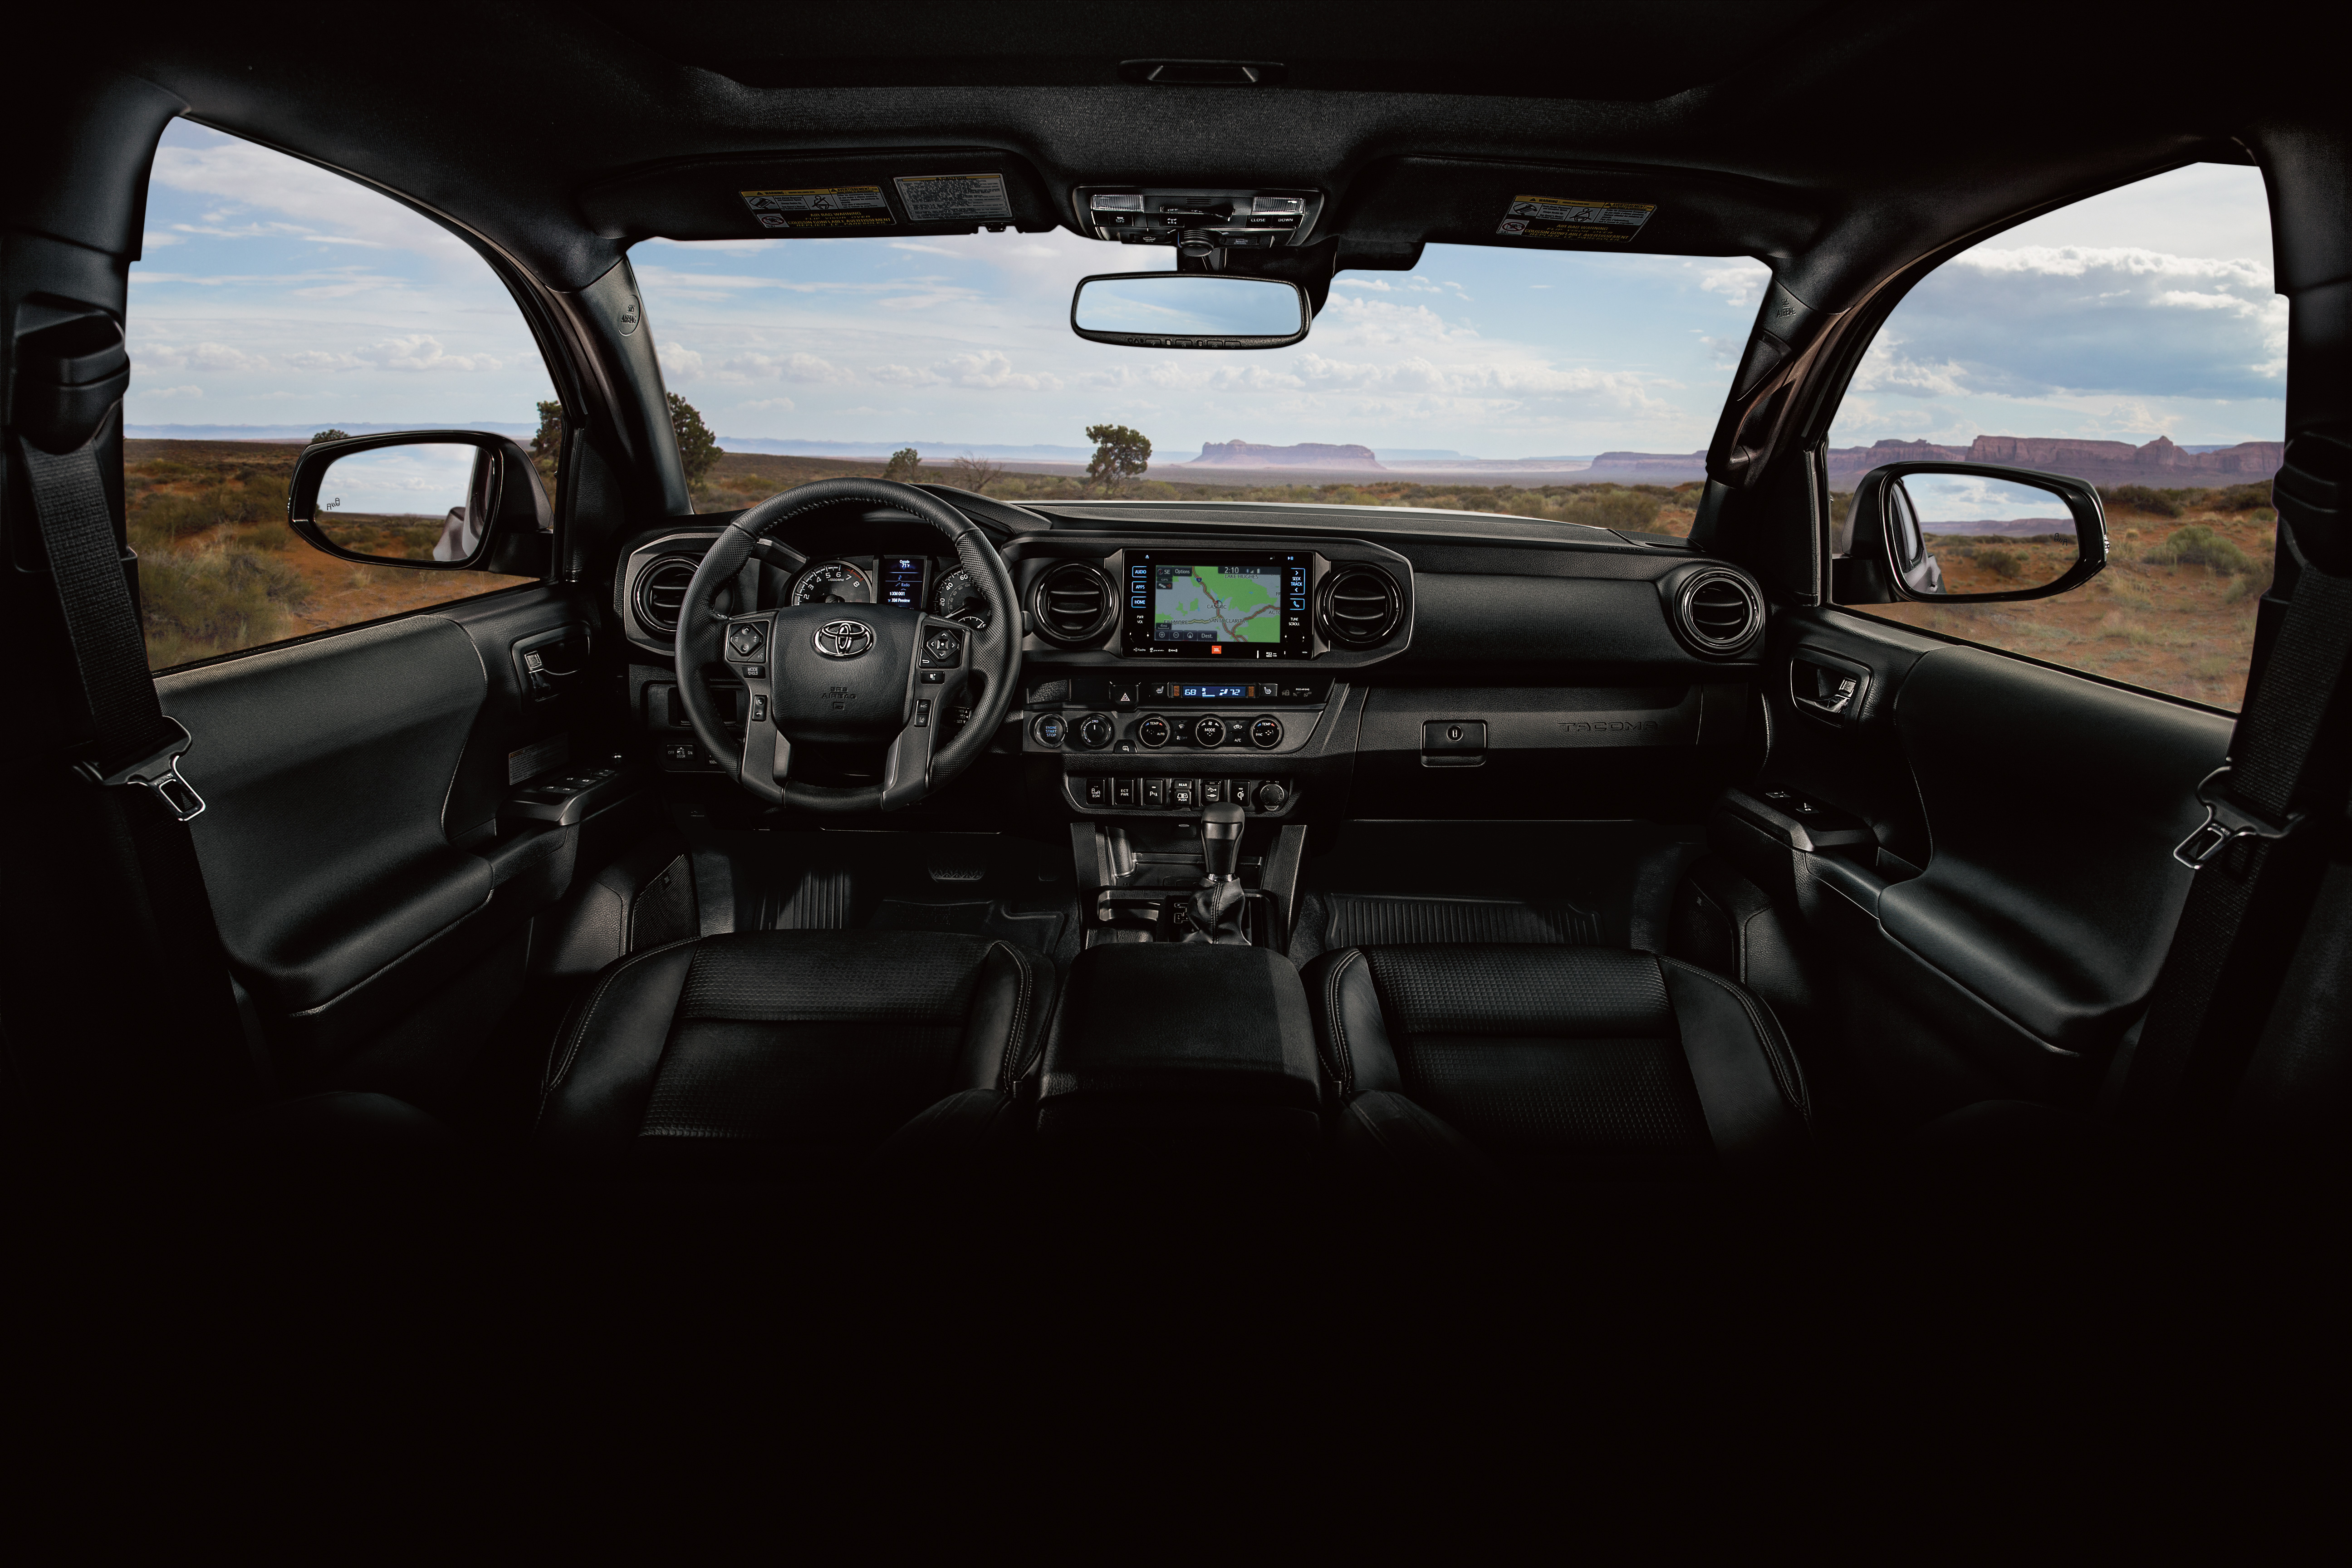 2019 Toyota Tacoma interior - The Fast Lane Truck